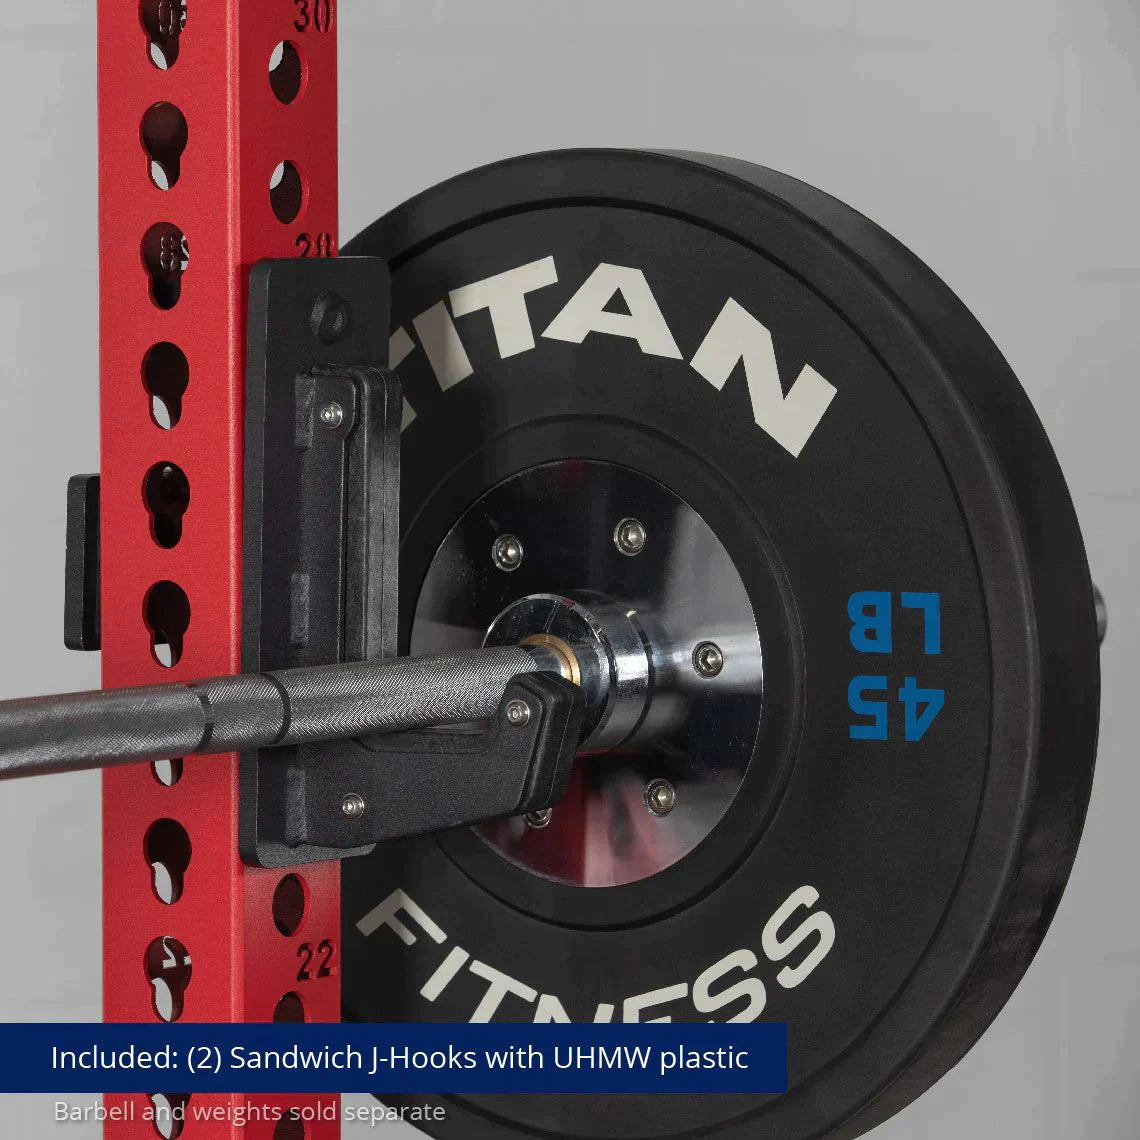 TITAN Series Power Rack 100" 42" - view 234